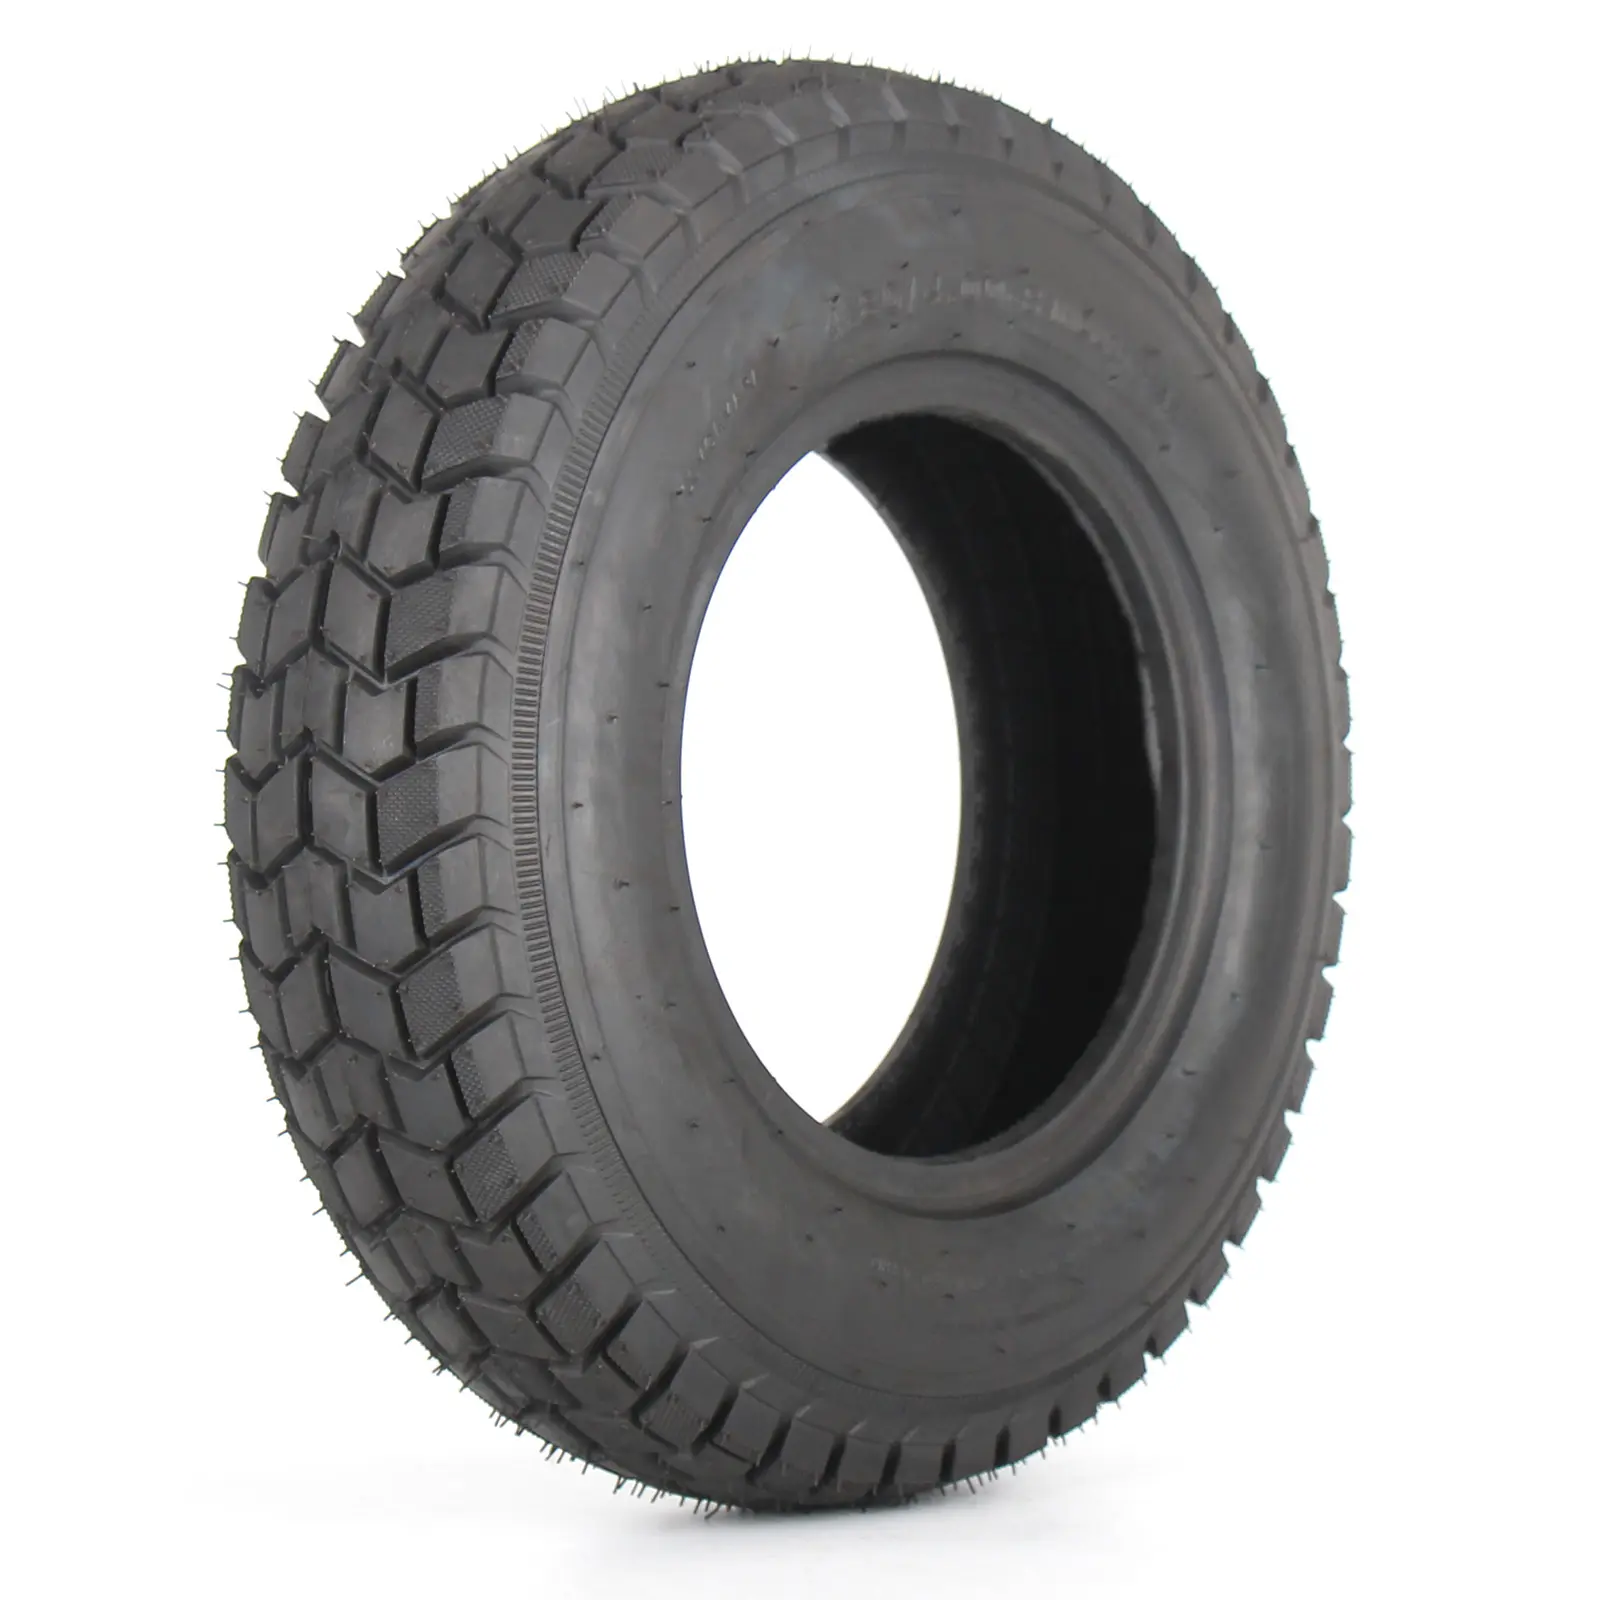 4.80/4.00-8 Super strong Tires for manual pedal GoKarts like DINO, Mammoet, Berg